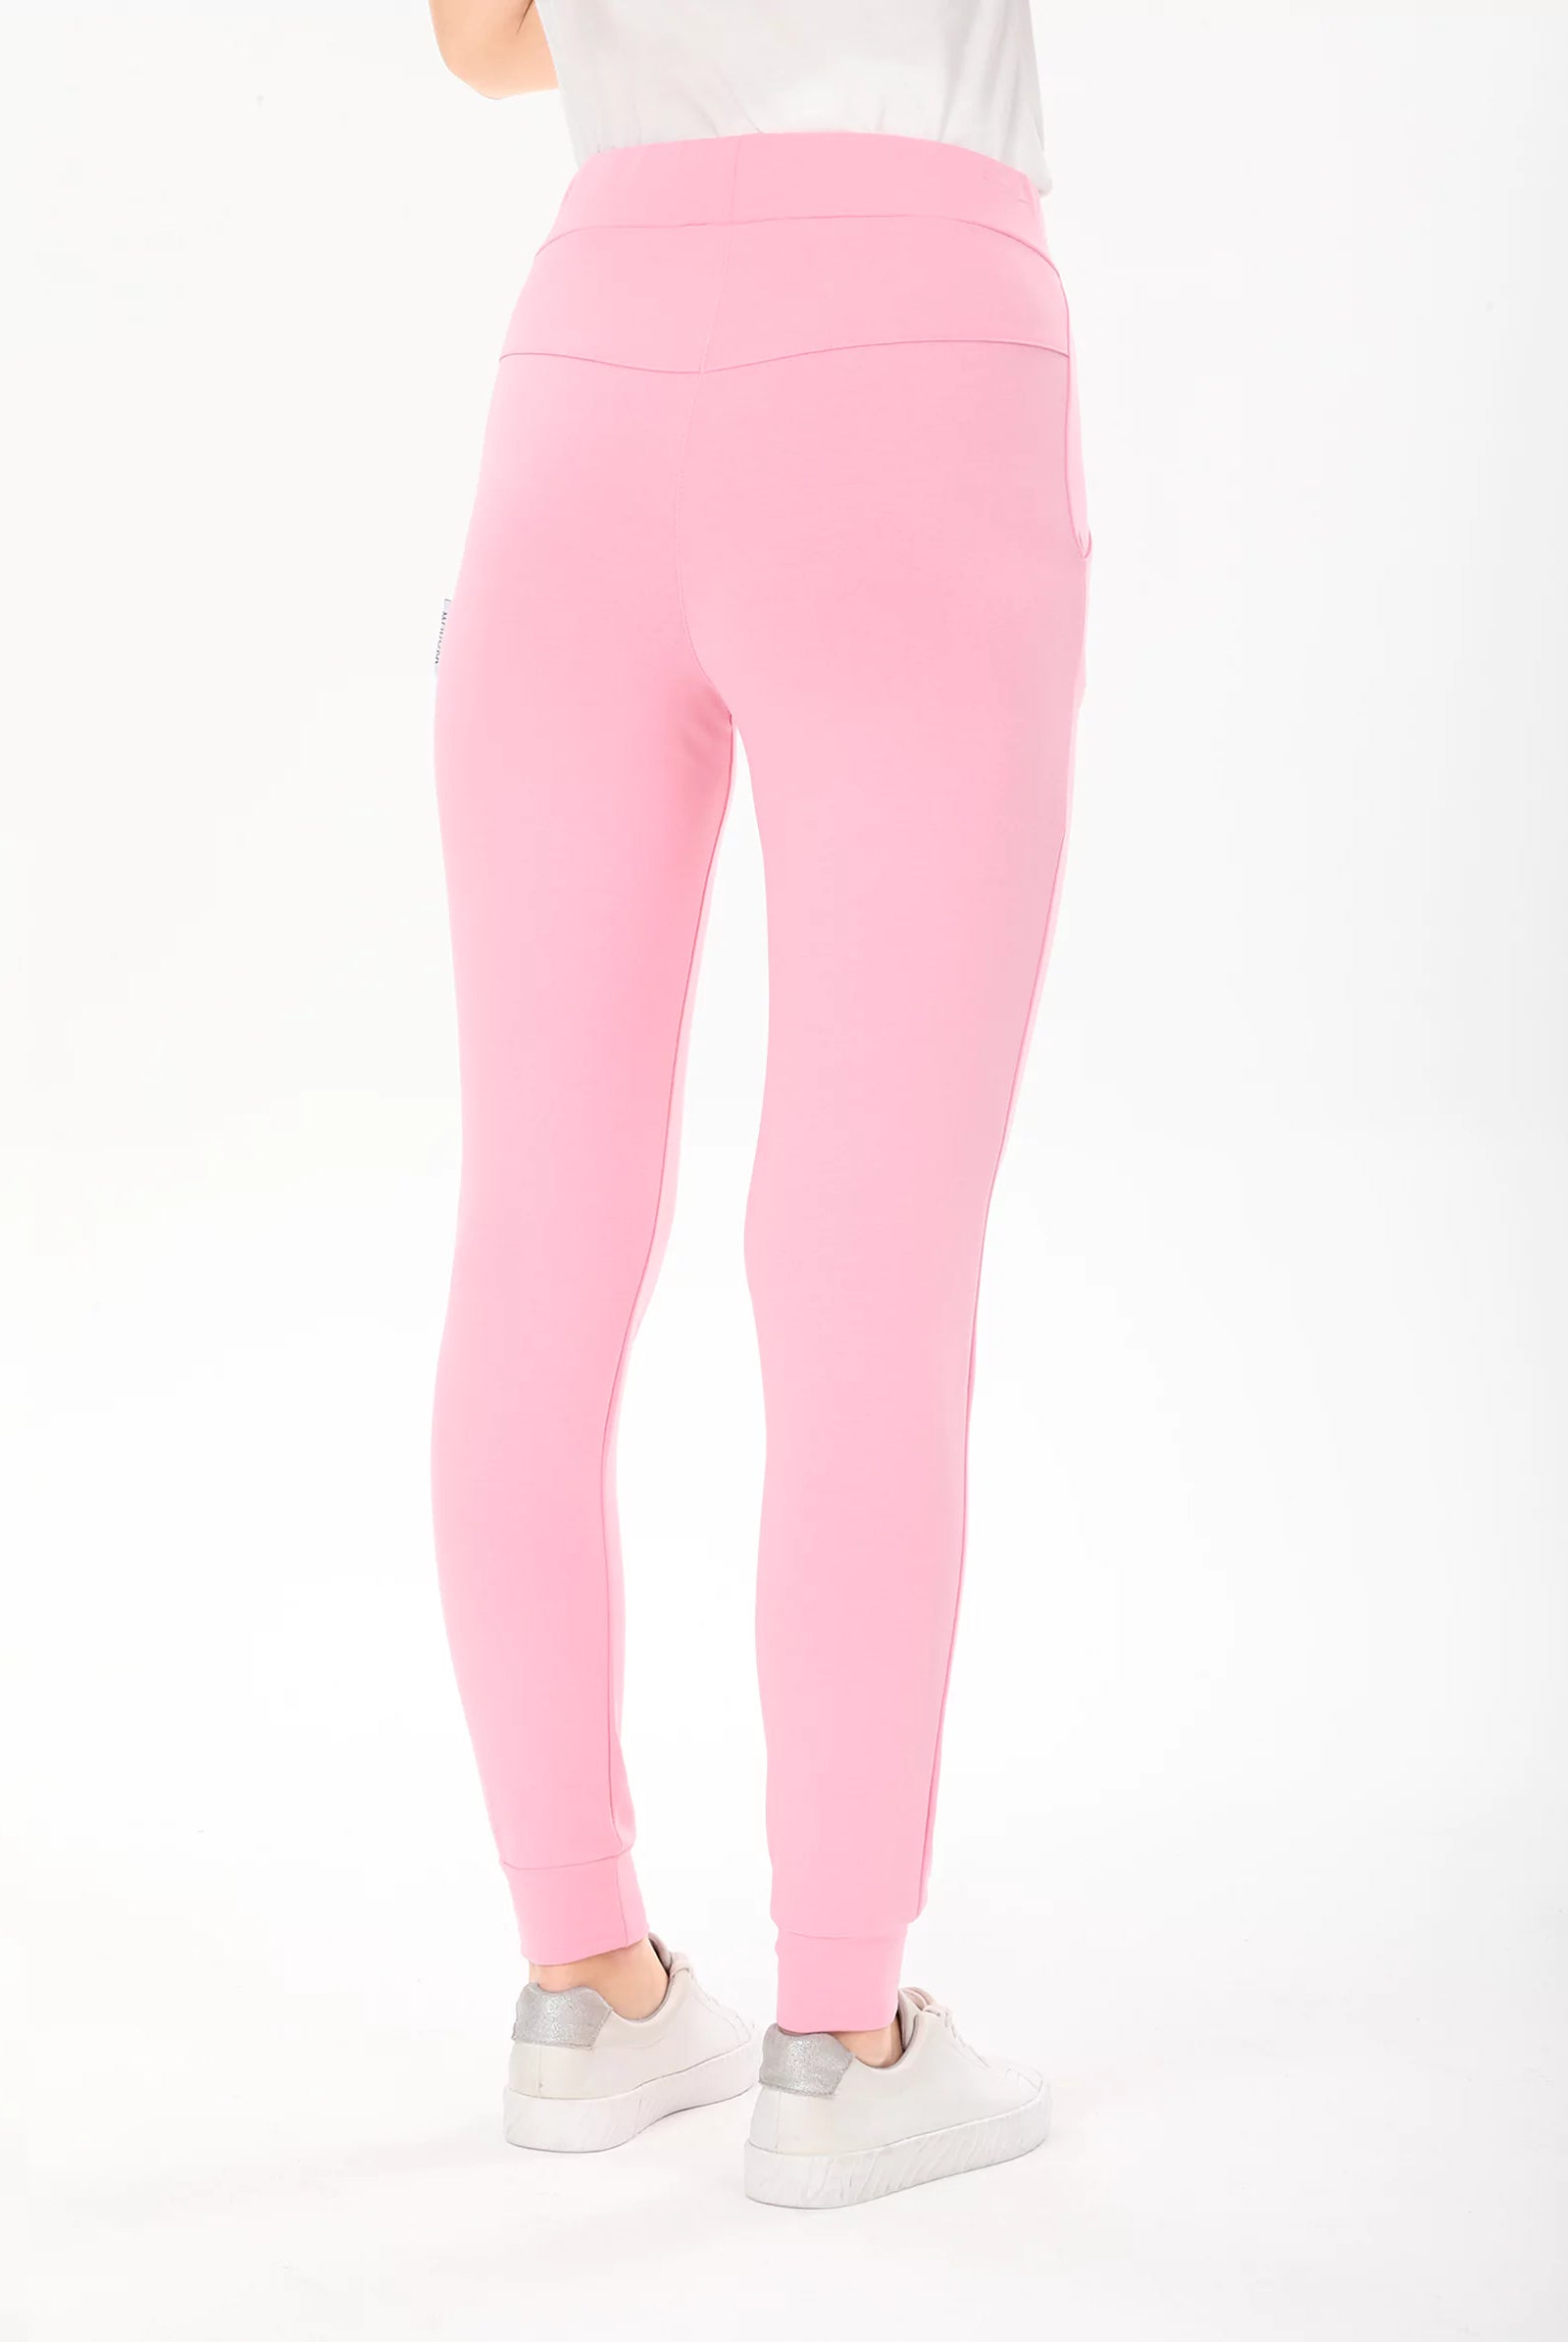 pink joggers women